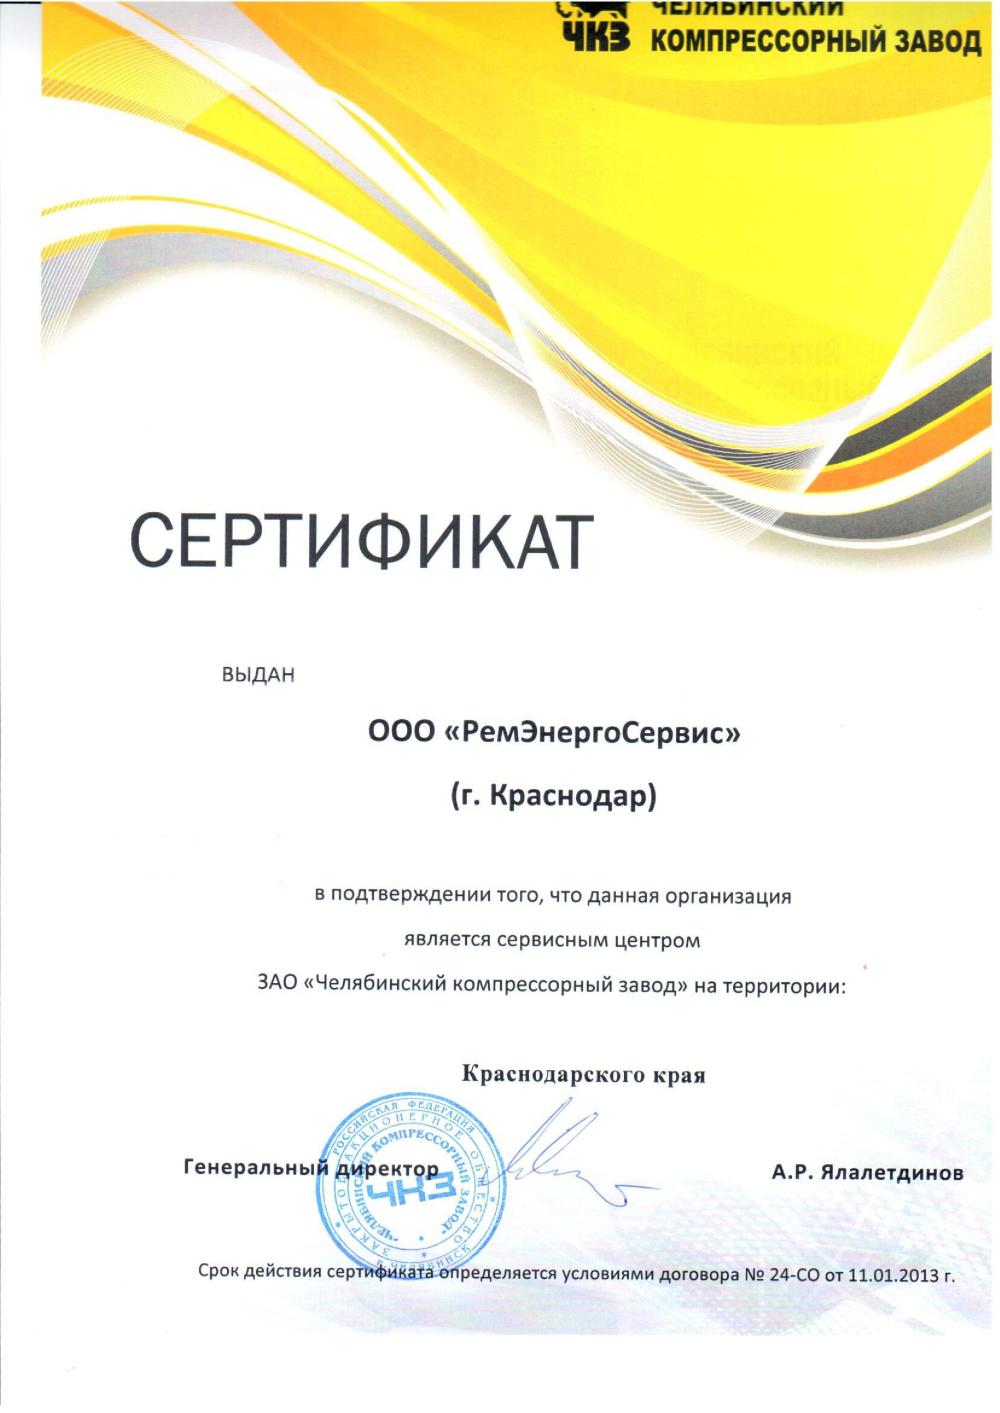 сертифика сервисного центра челябинского компрессорного завода